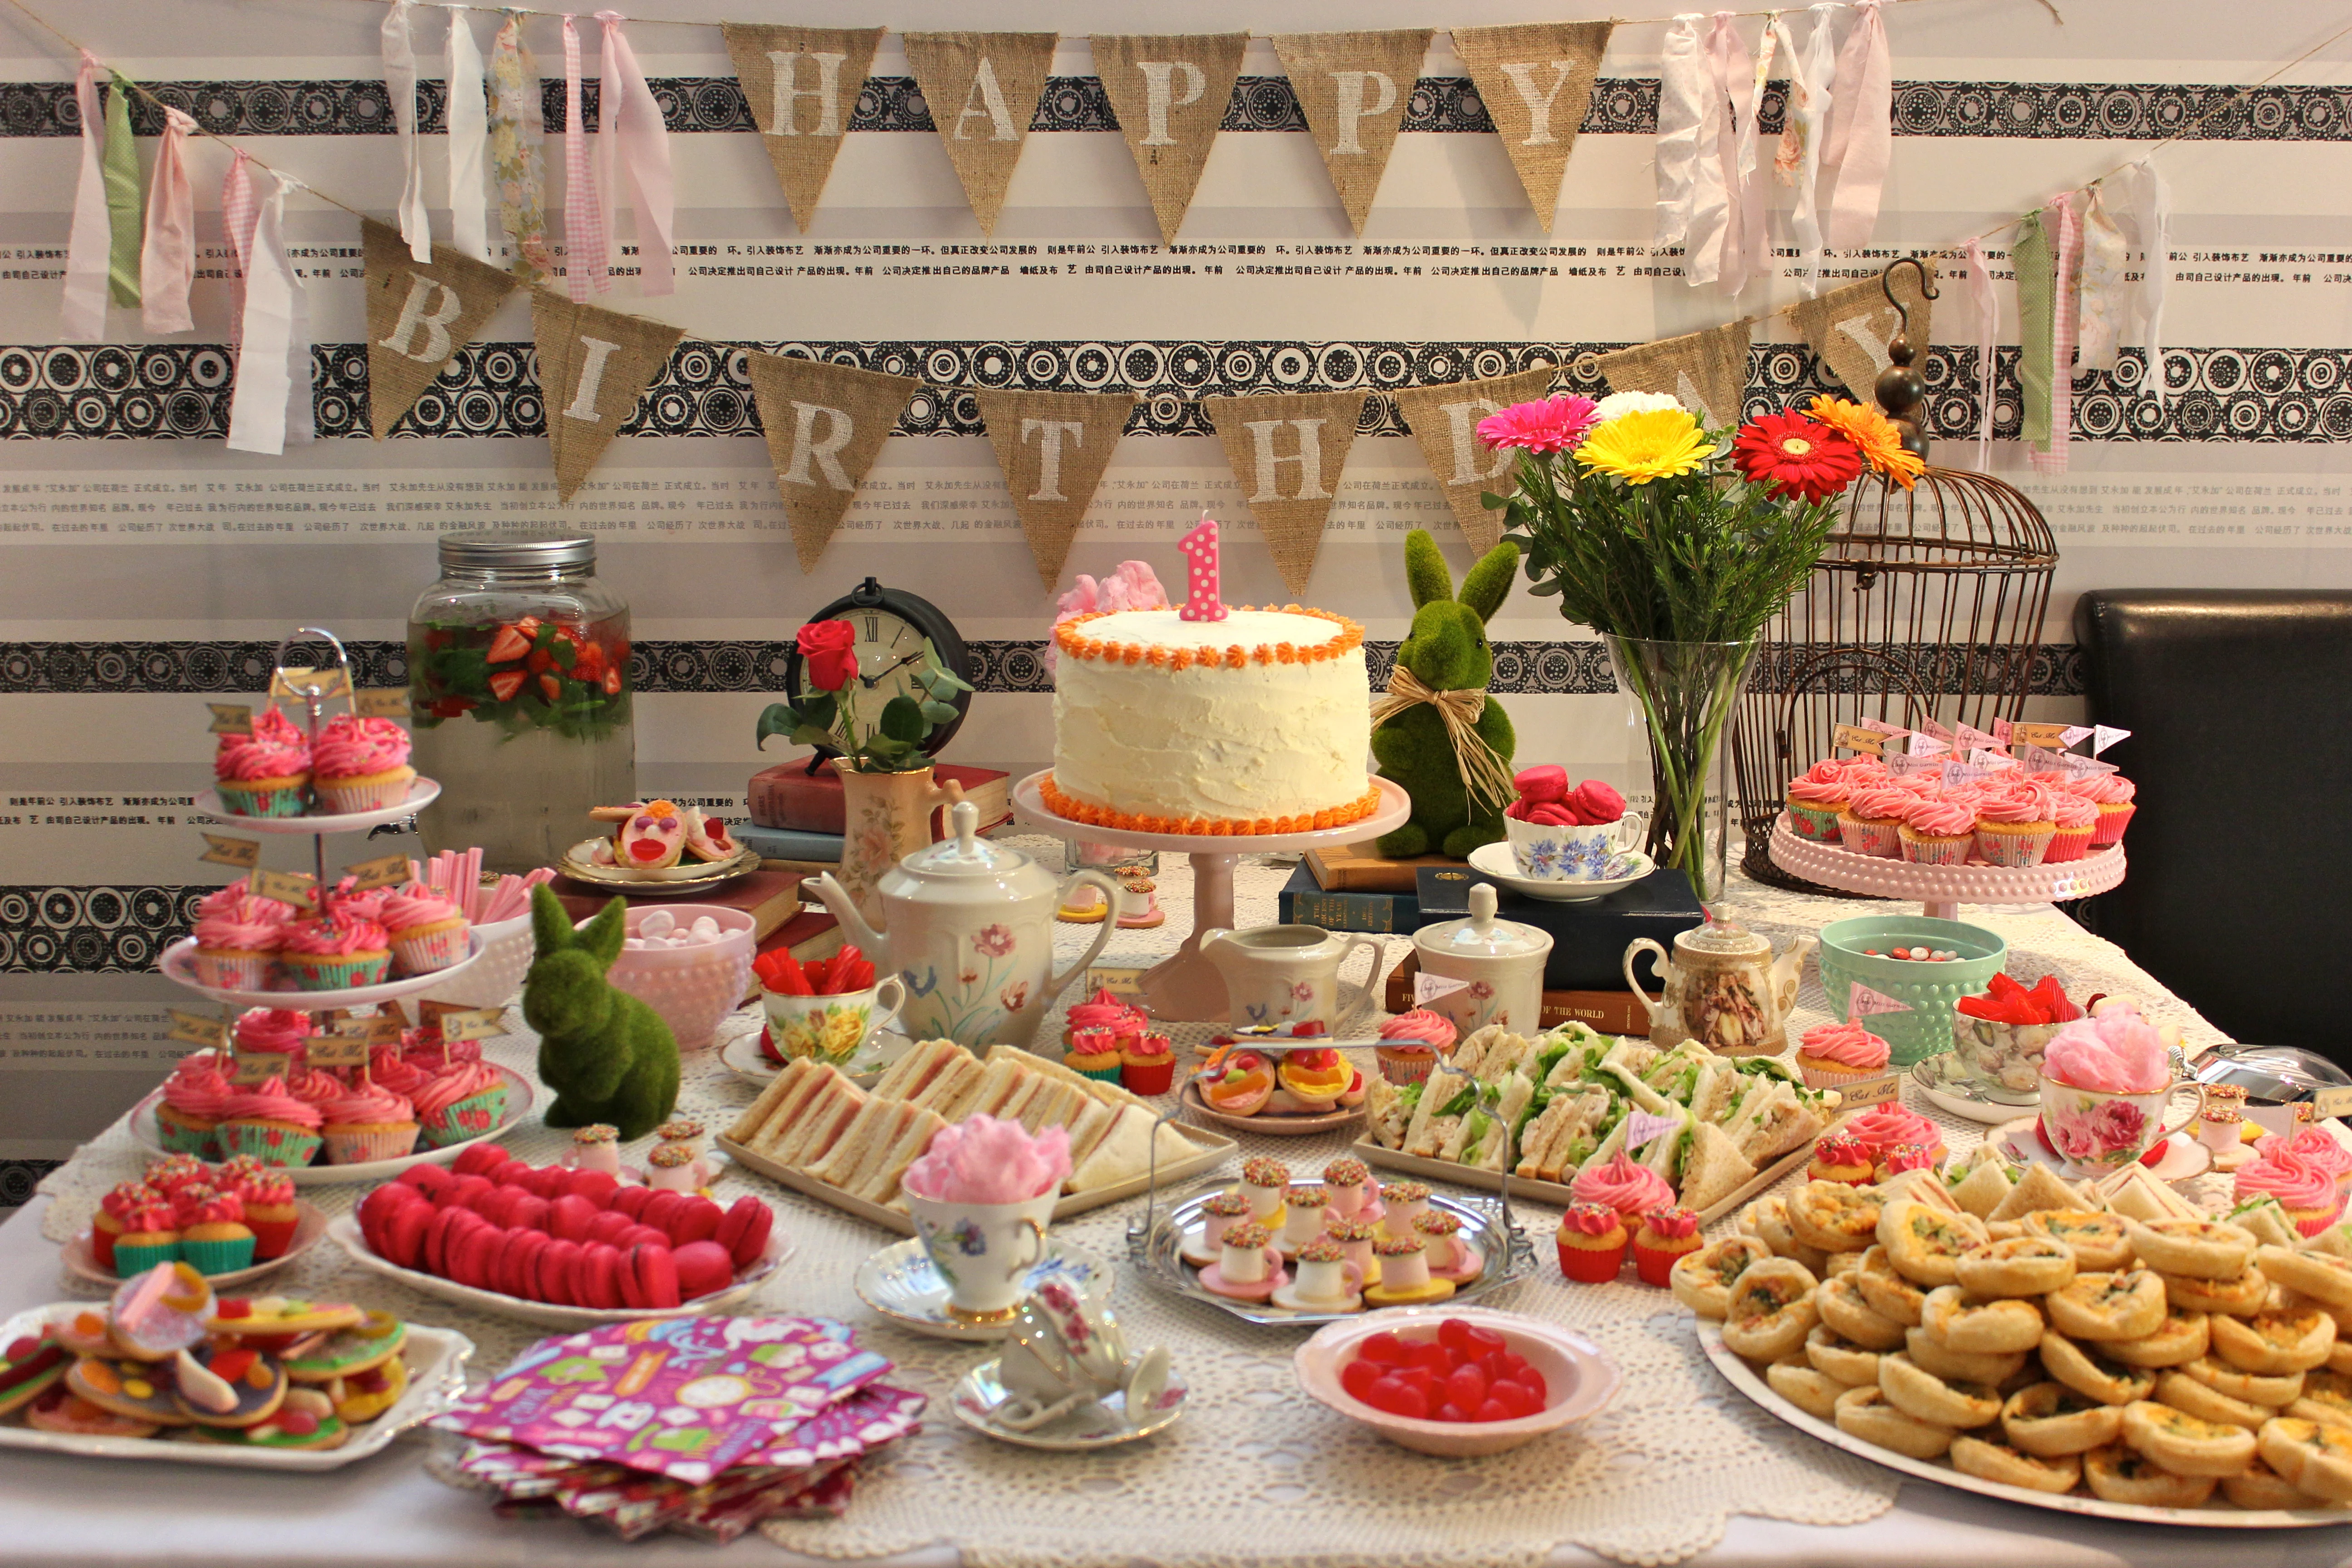 Alison in Wonderland Vintage Tea Birthday Party